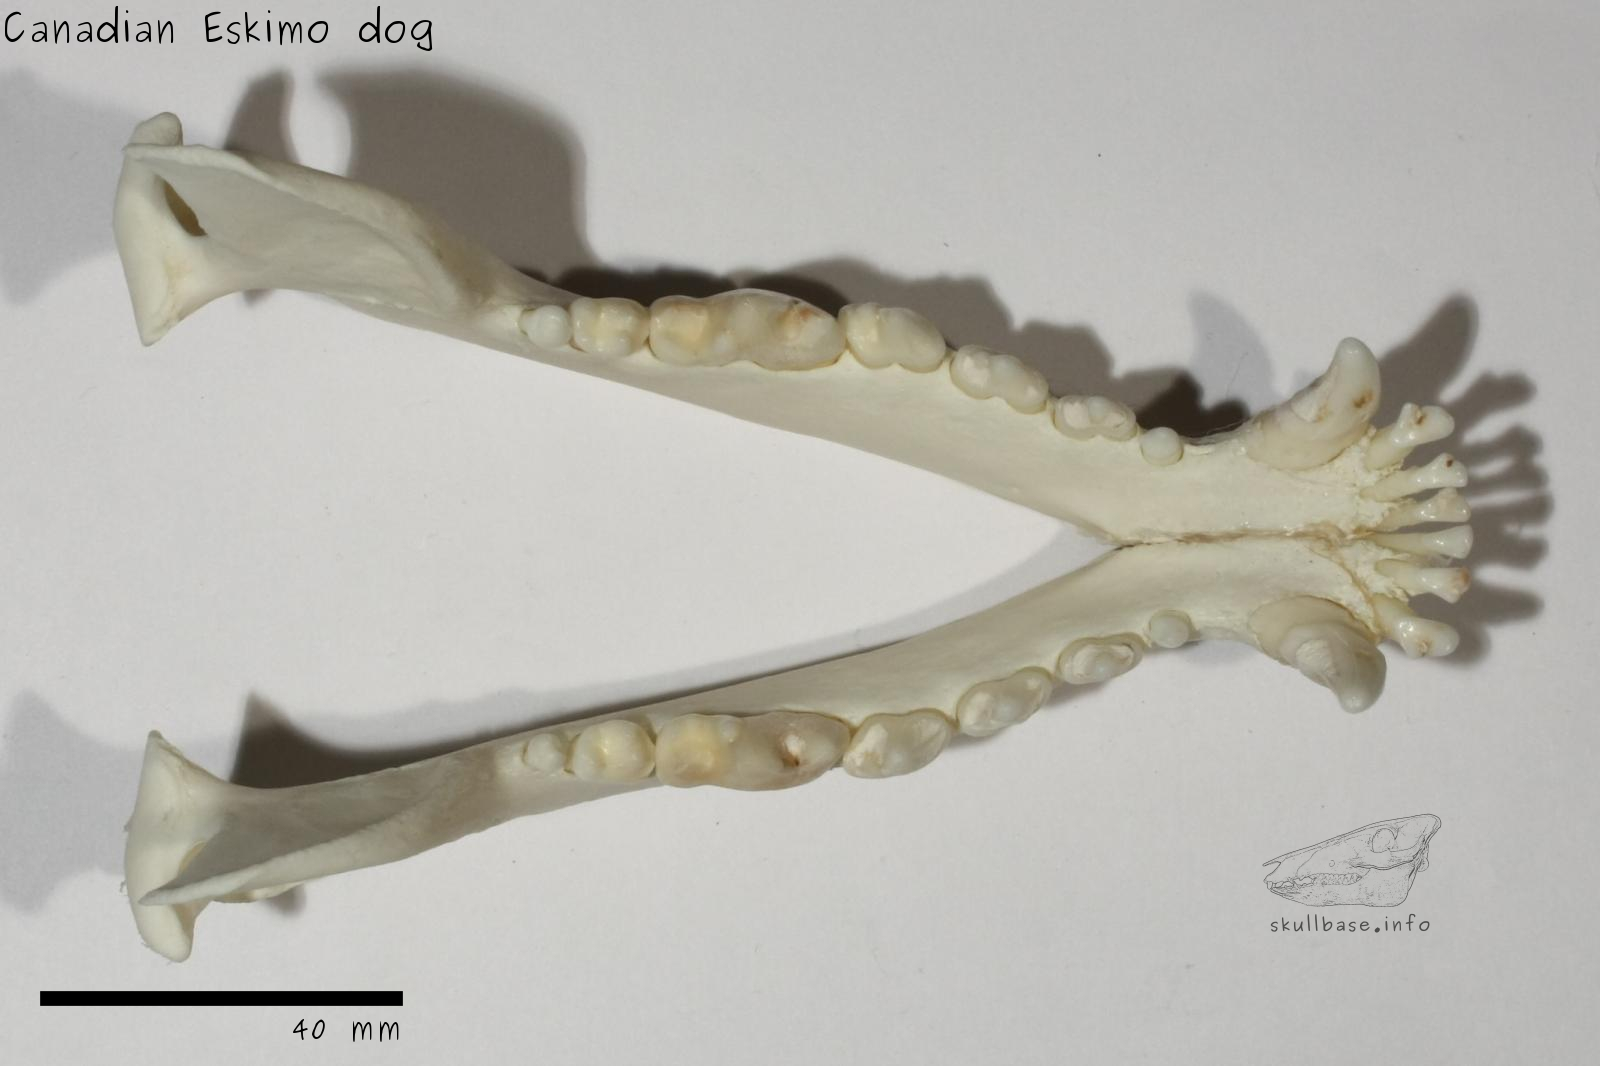 Canadian Eskimo dog (Canis lupus familiaris) jaw